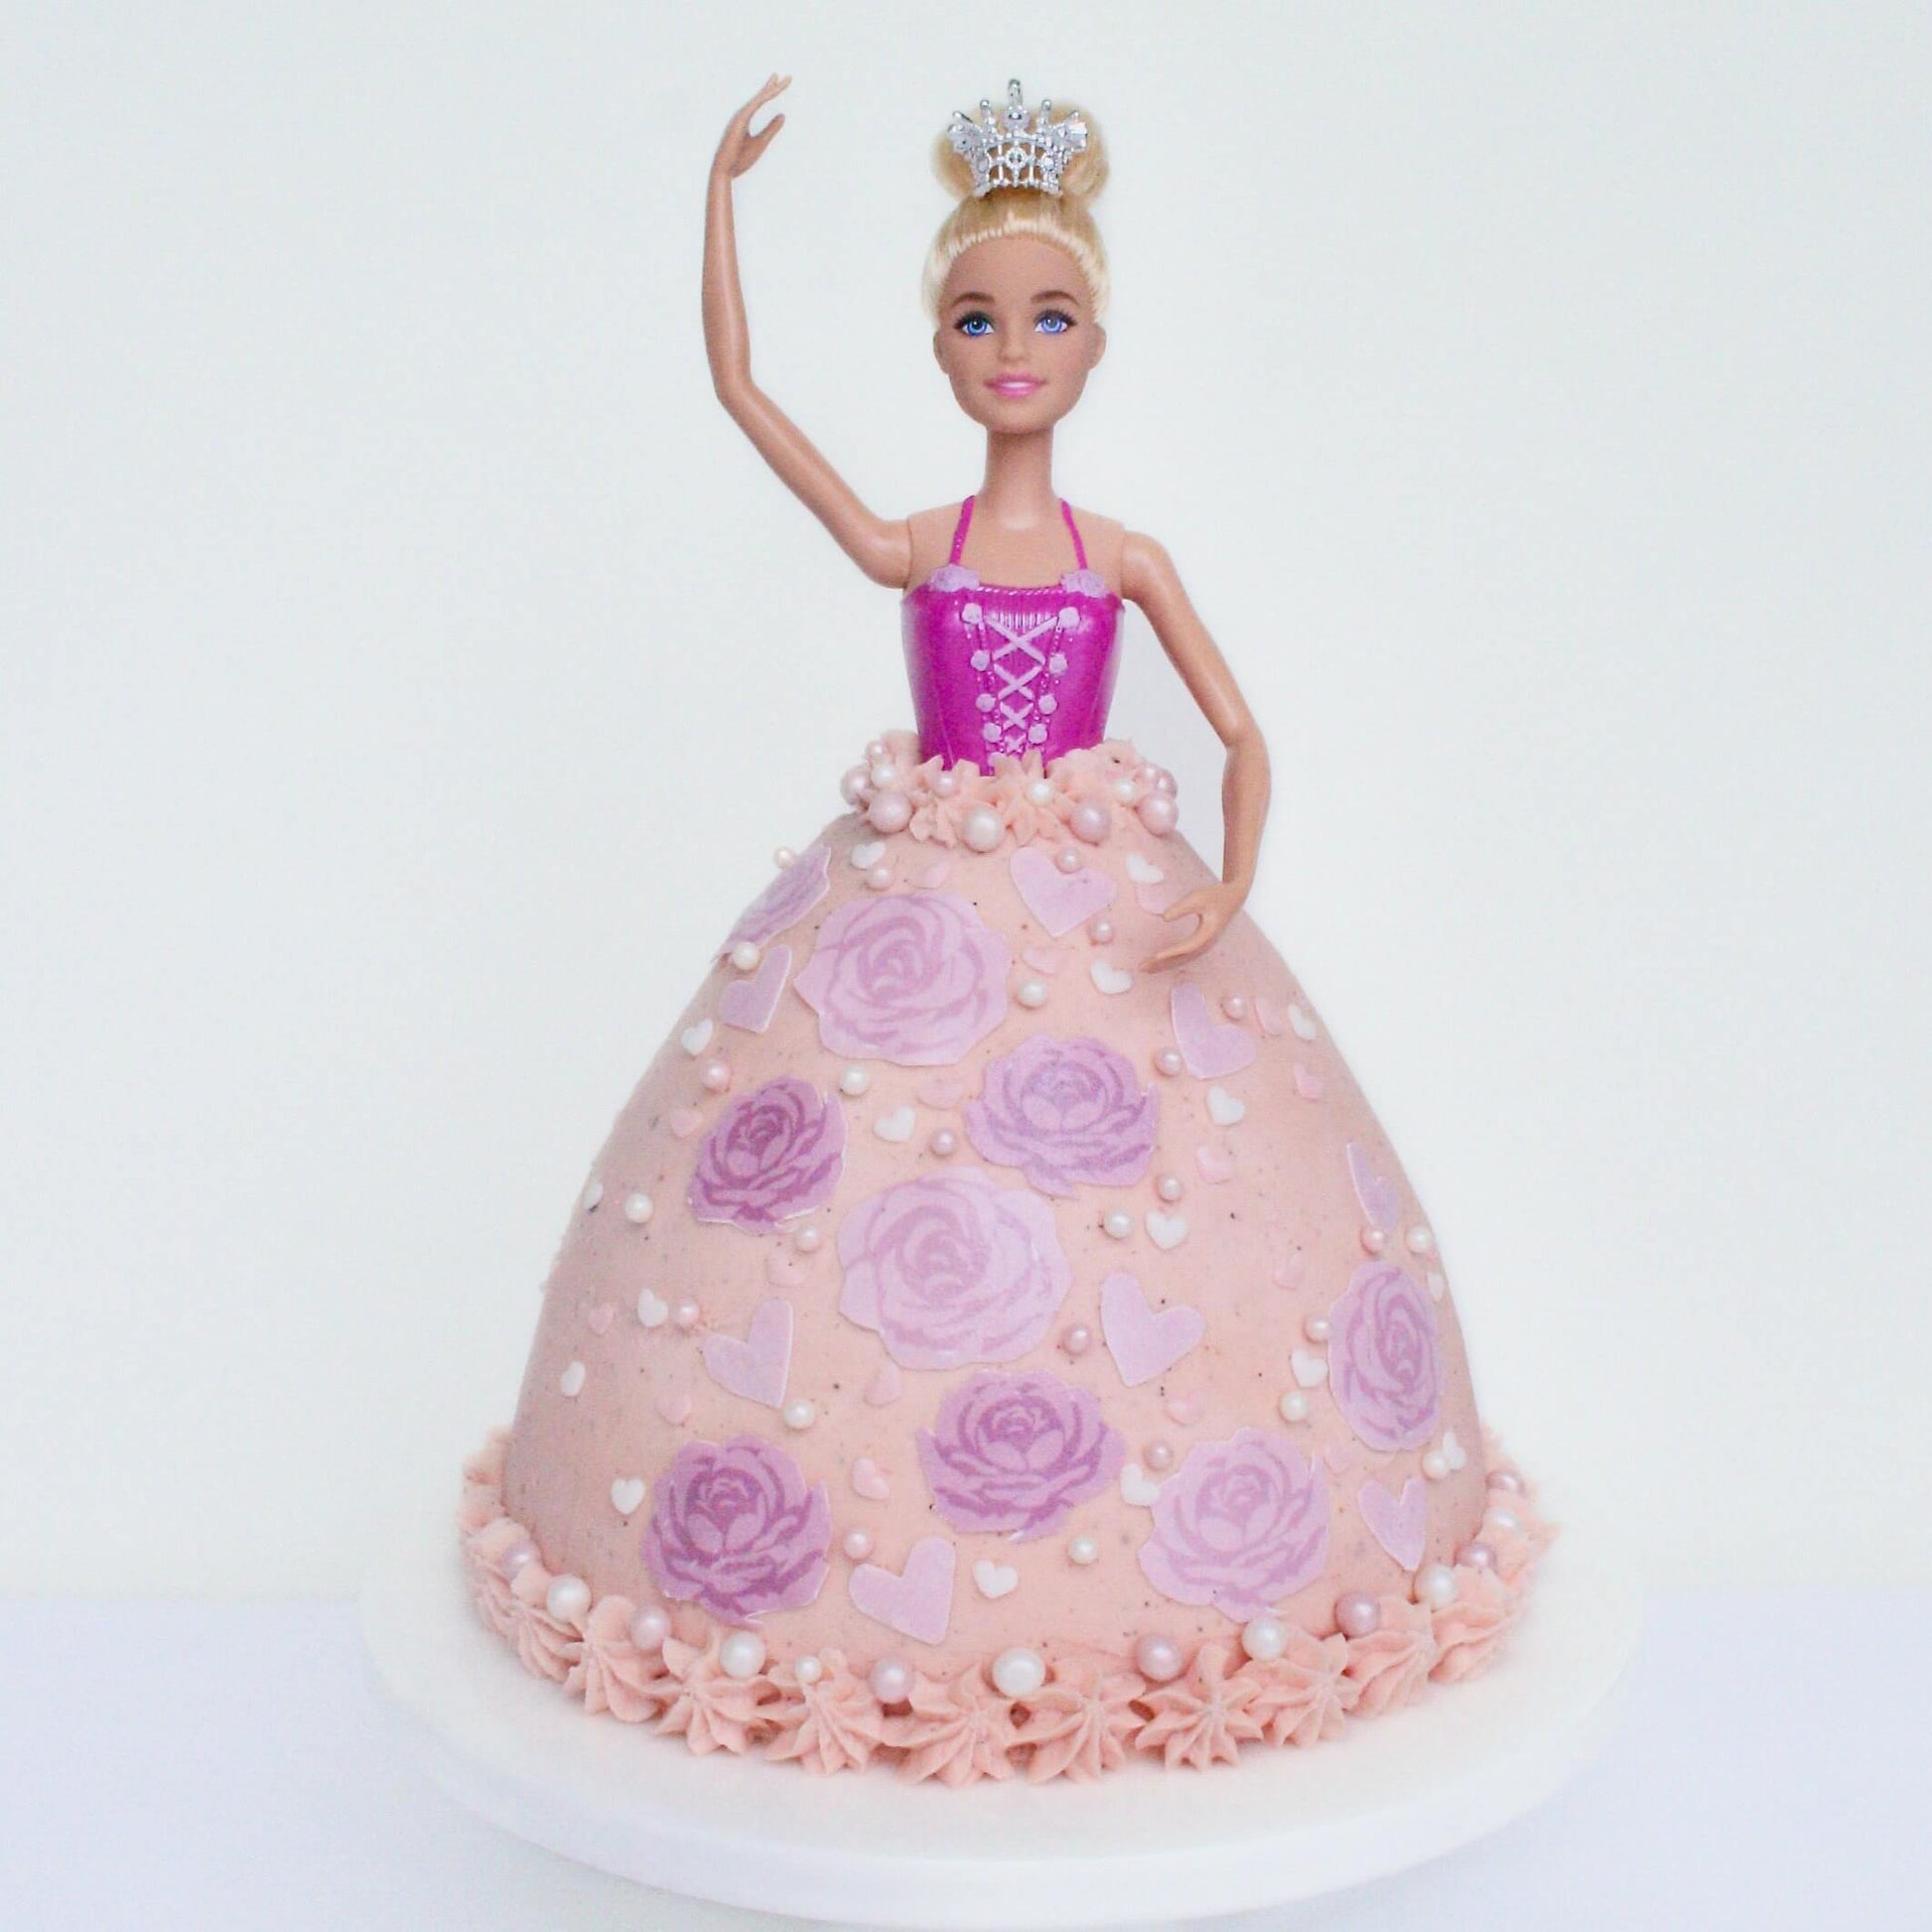 Rose Princess Dolly Varden Cake